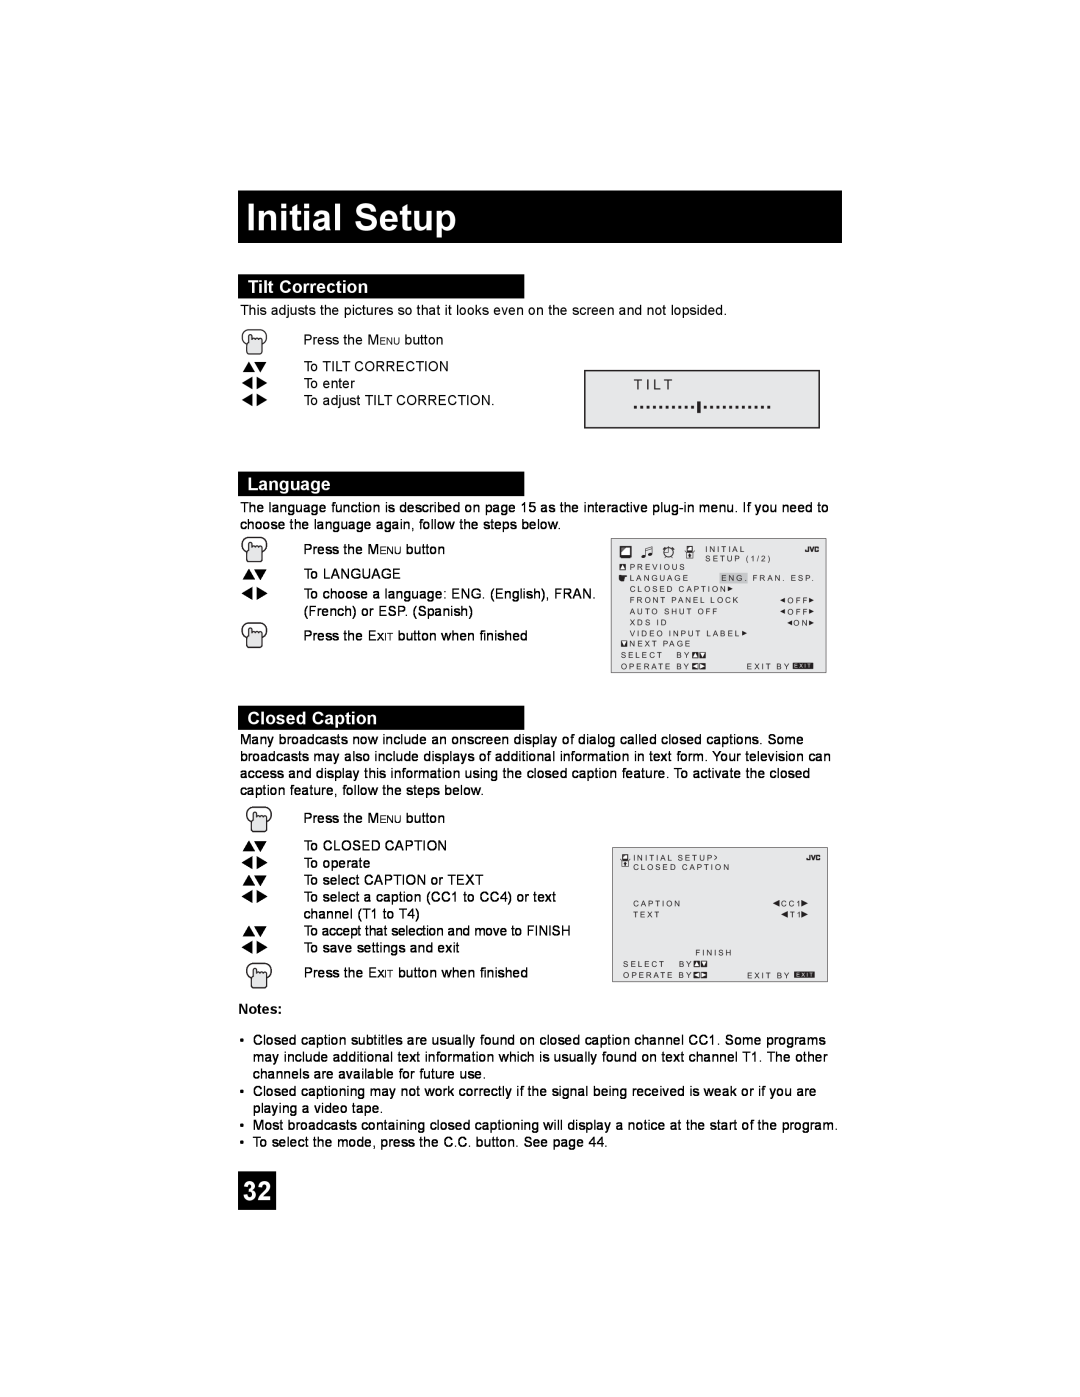 JVC AV 30W476 manual Tilt Correction, Language, Closed Caption, Initial Setup 